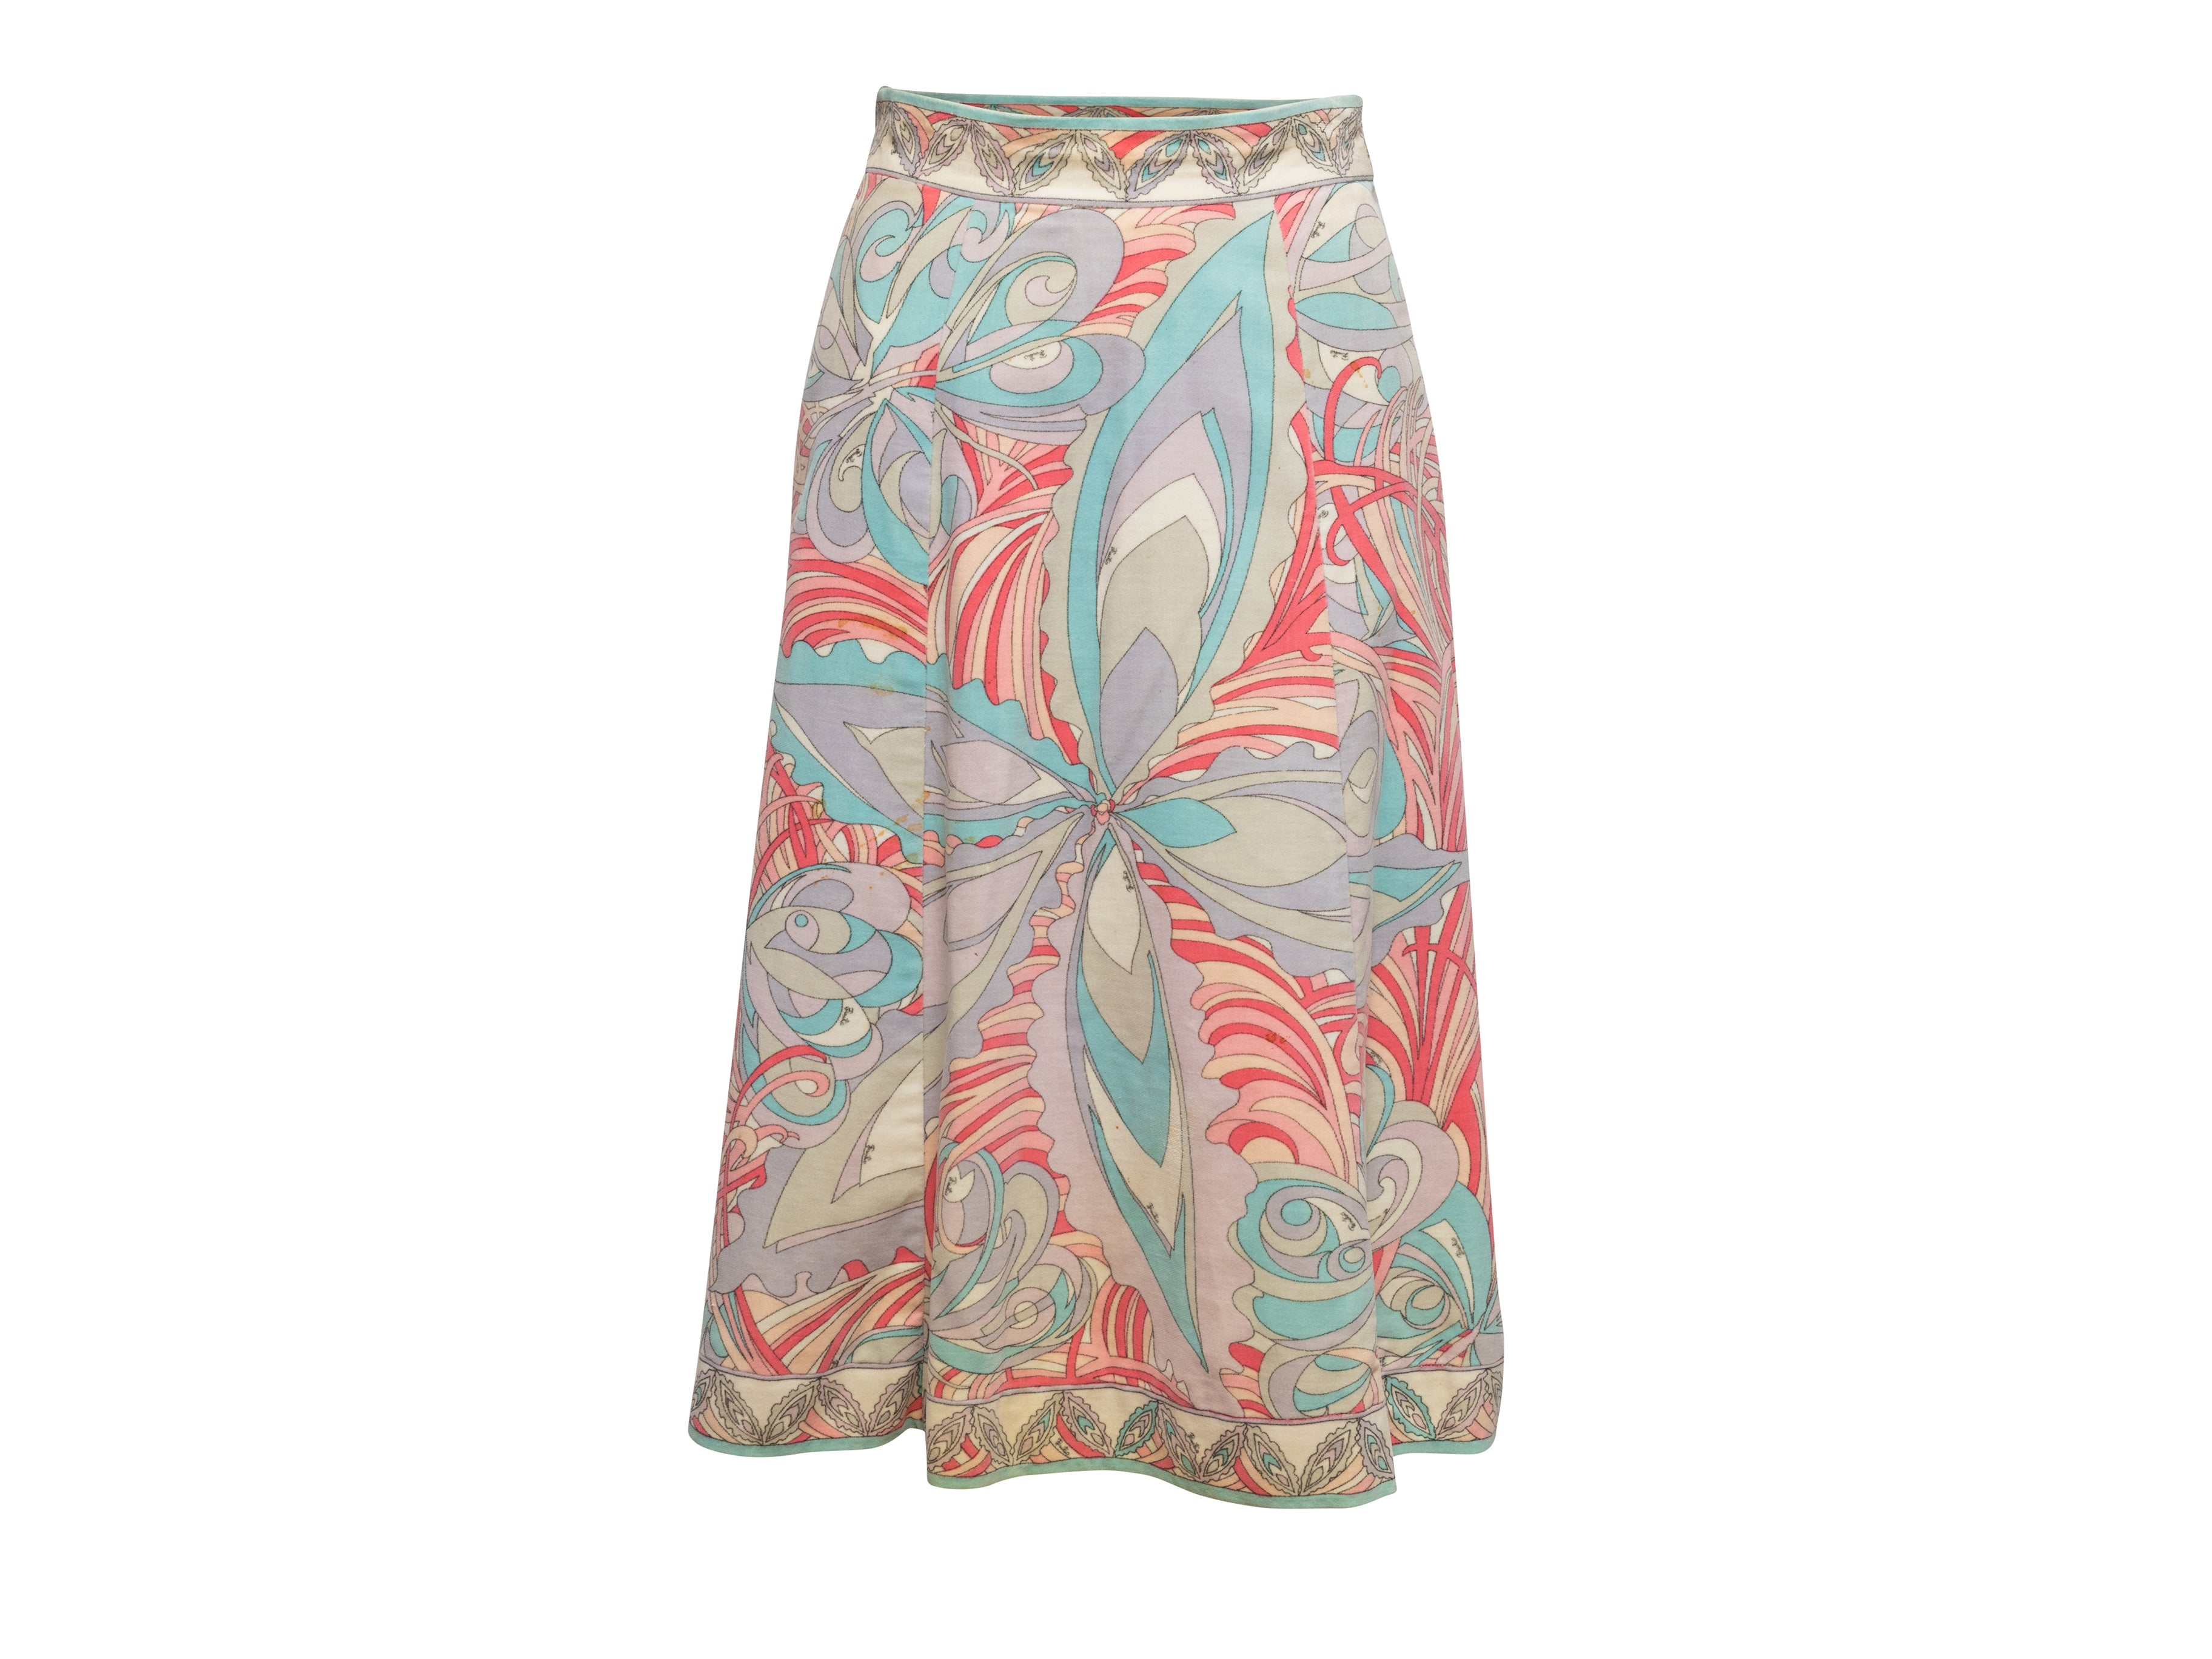 Lavender & Multicolor 60s Printed Skirt